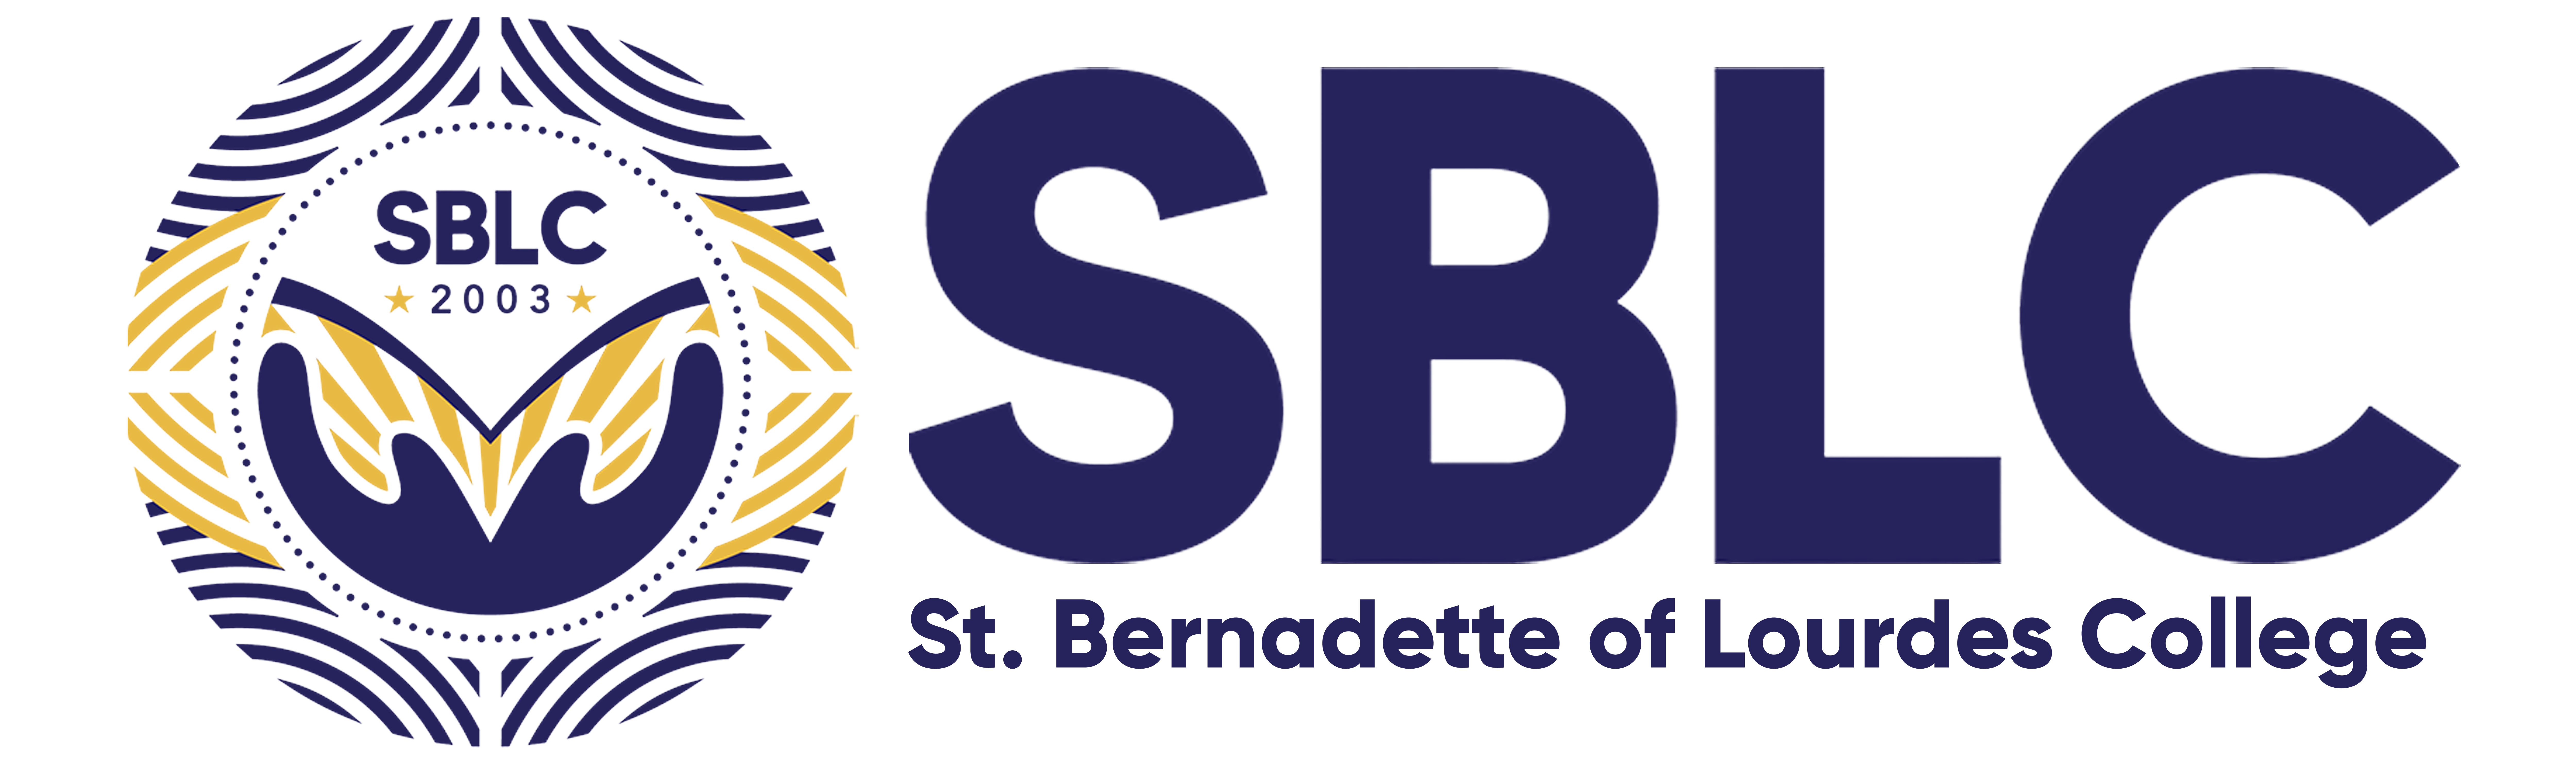 sblc logo 1